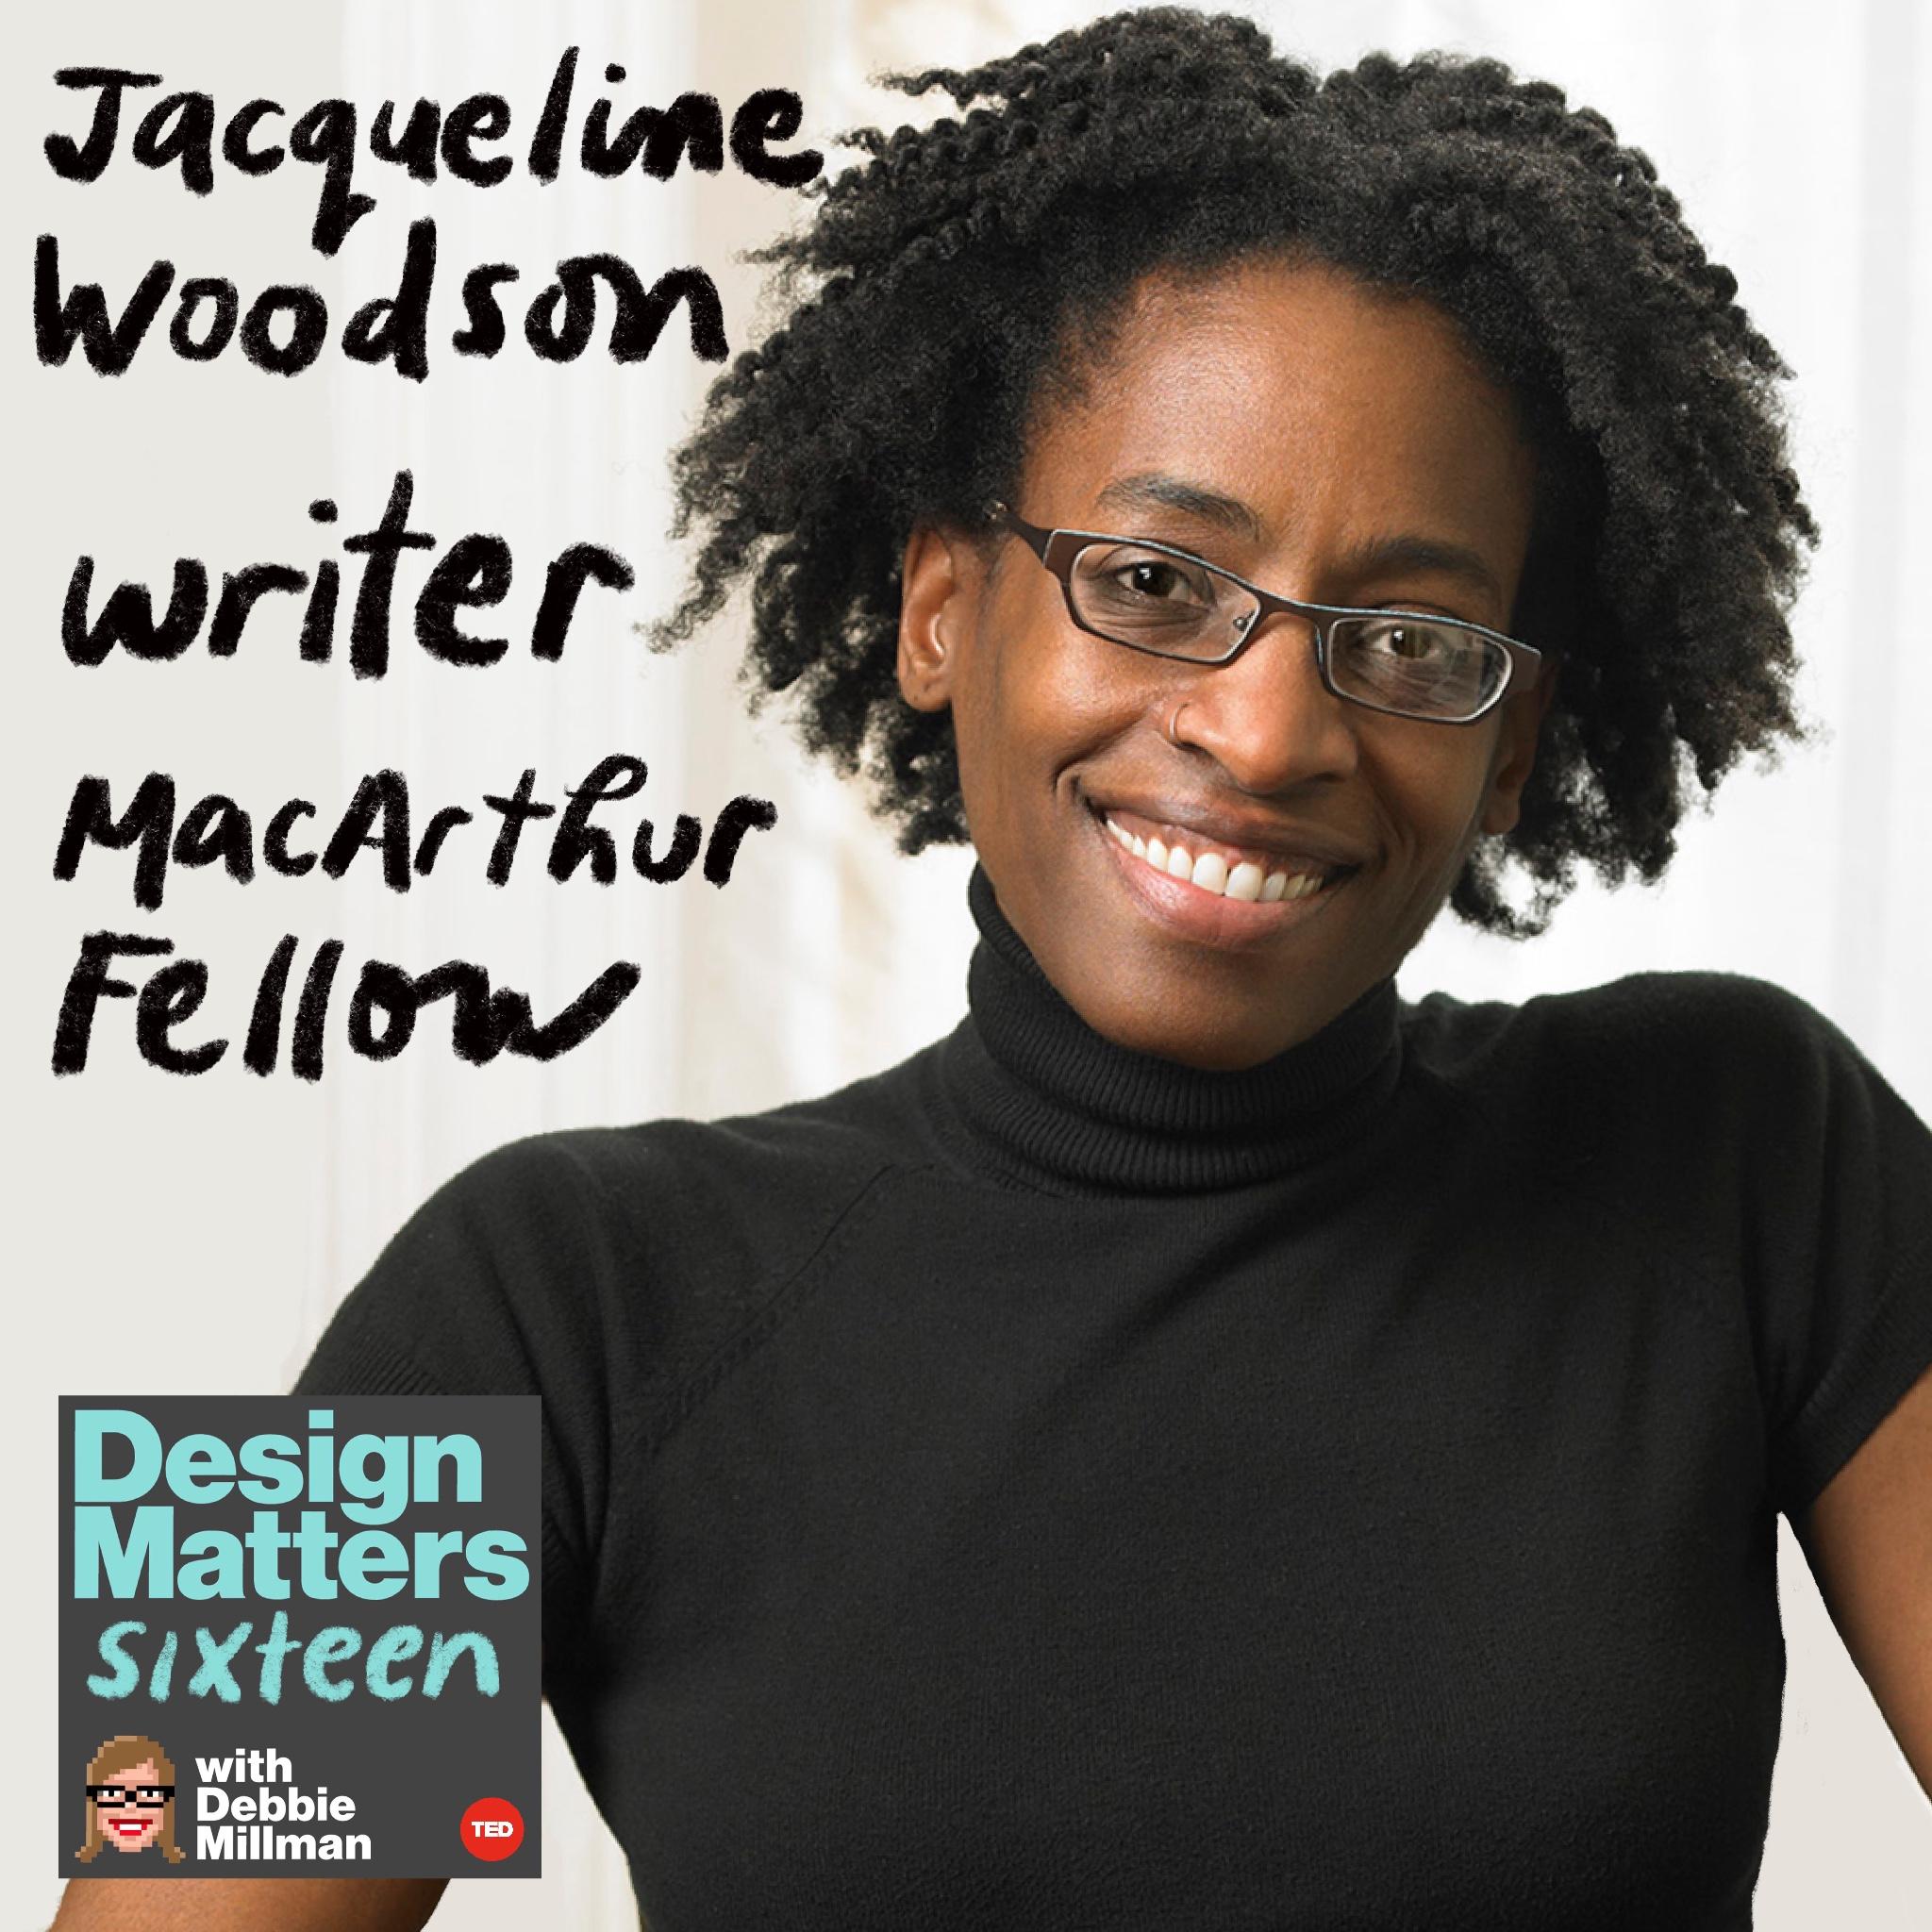 Thumbnail for "Jacqueline Woodson".